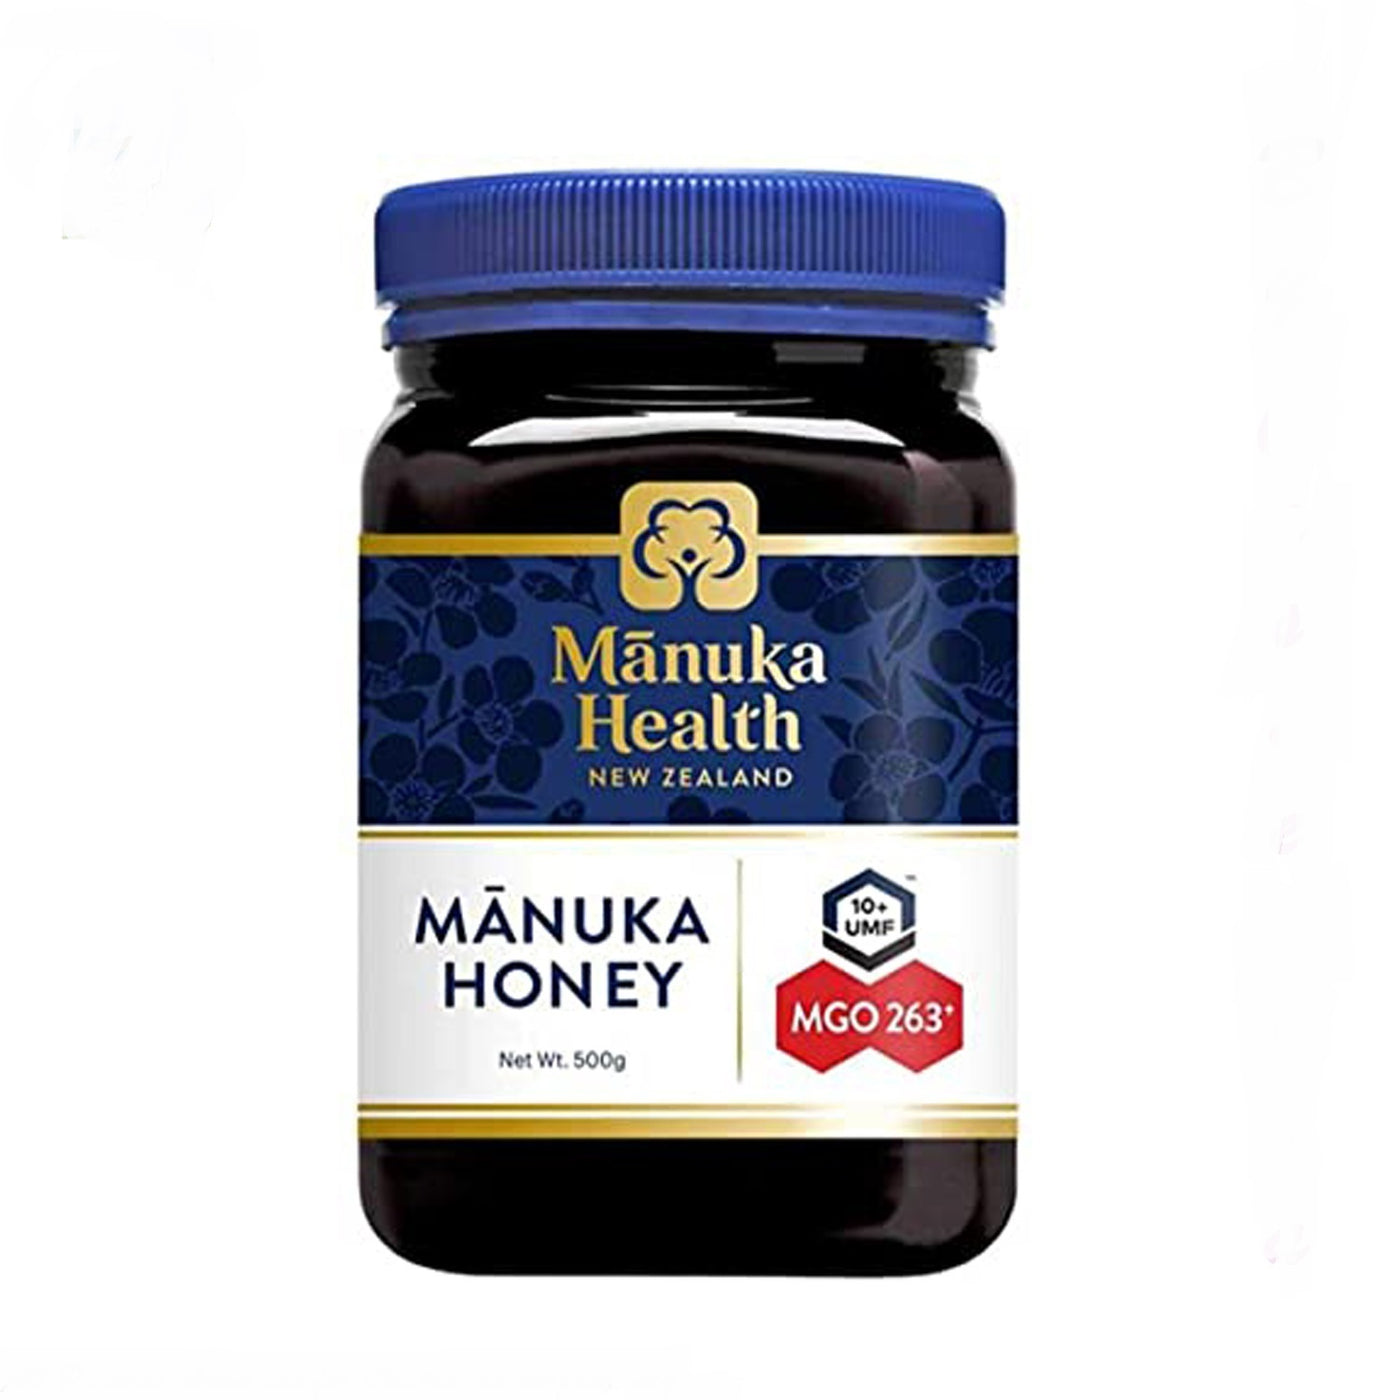 MANUKA HEALTH HONEY MGO263+ 500g